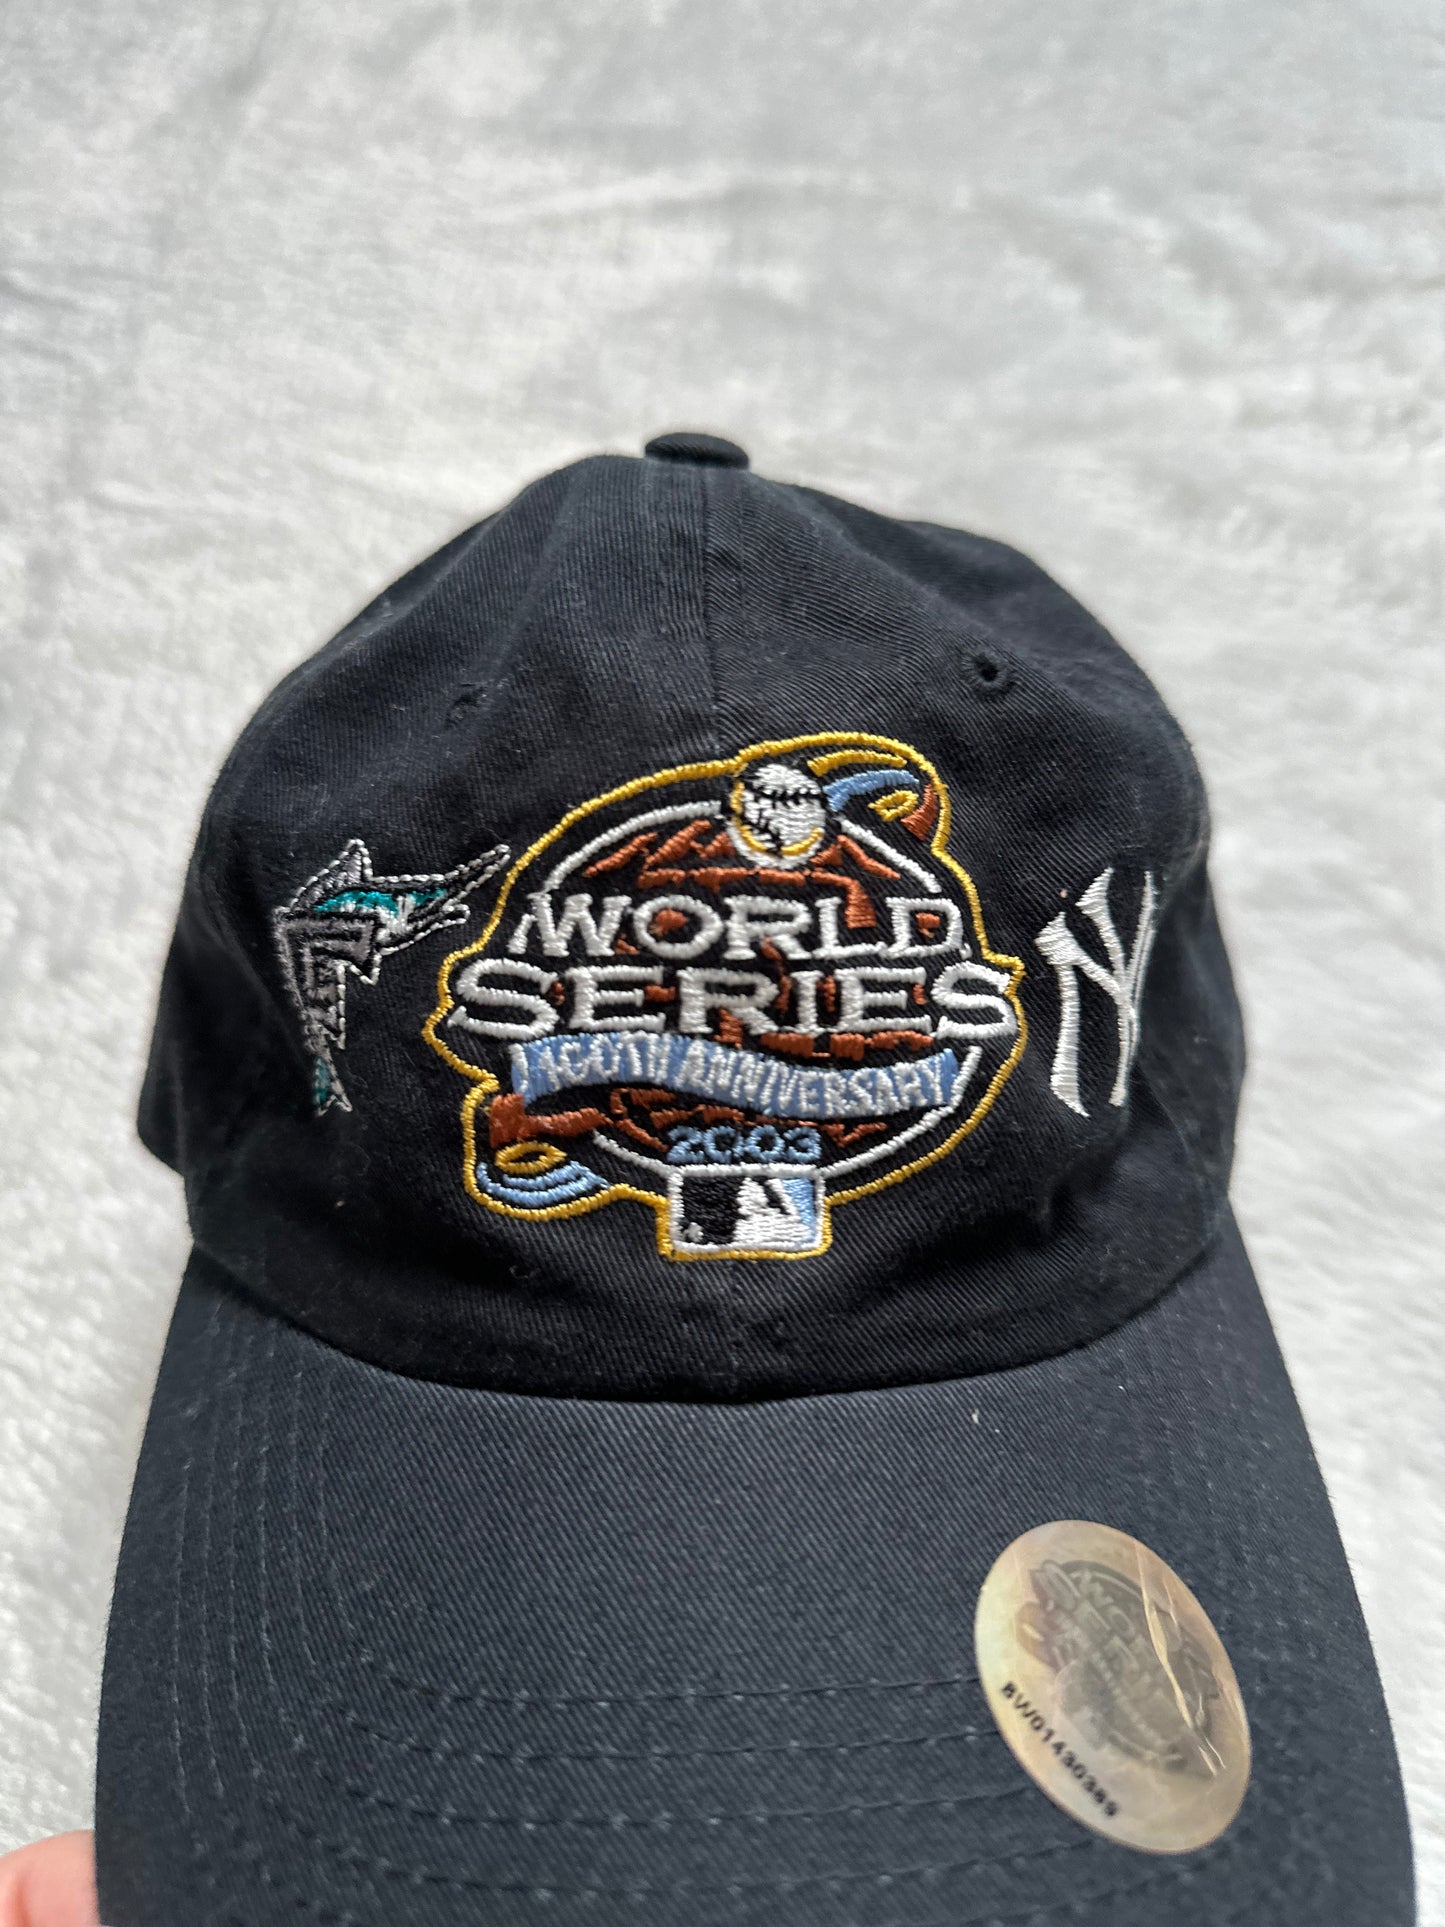 2003 World Series Baseball Cap